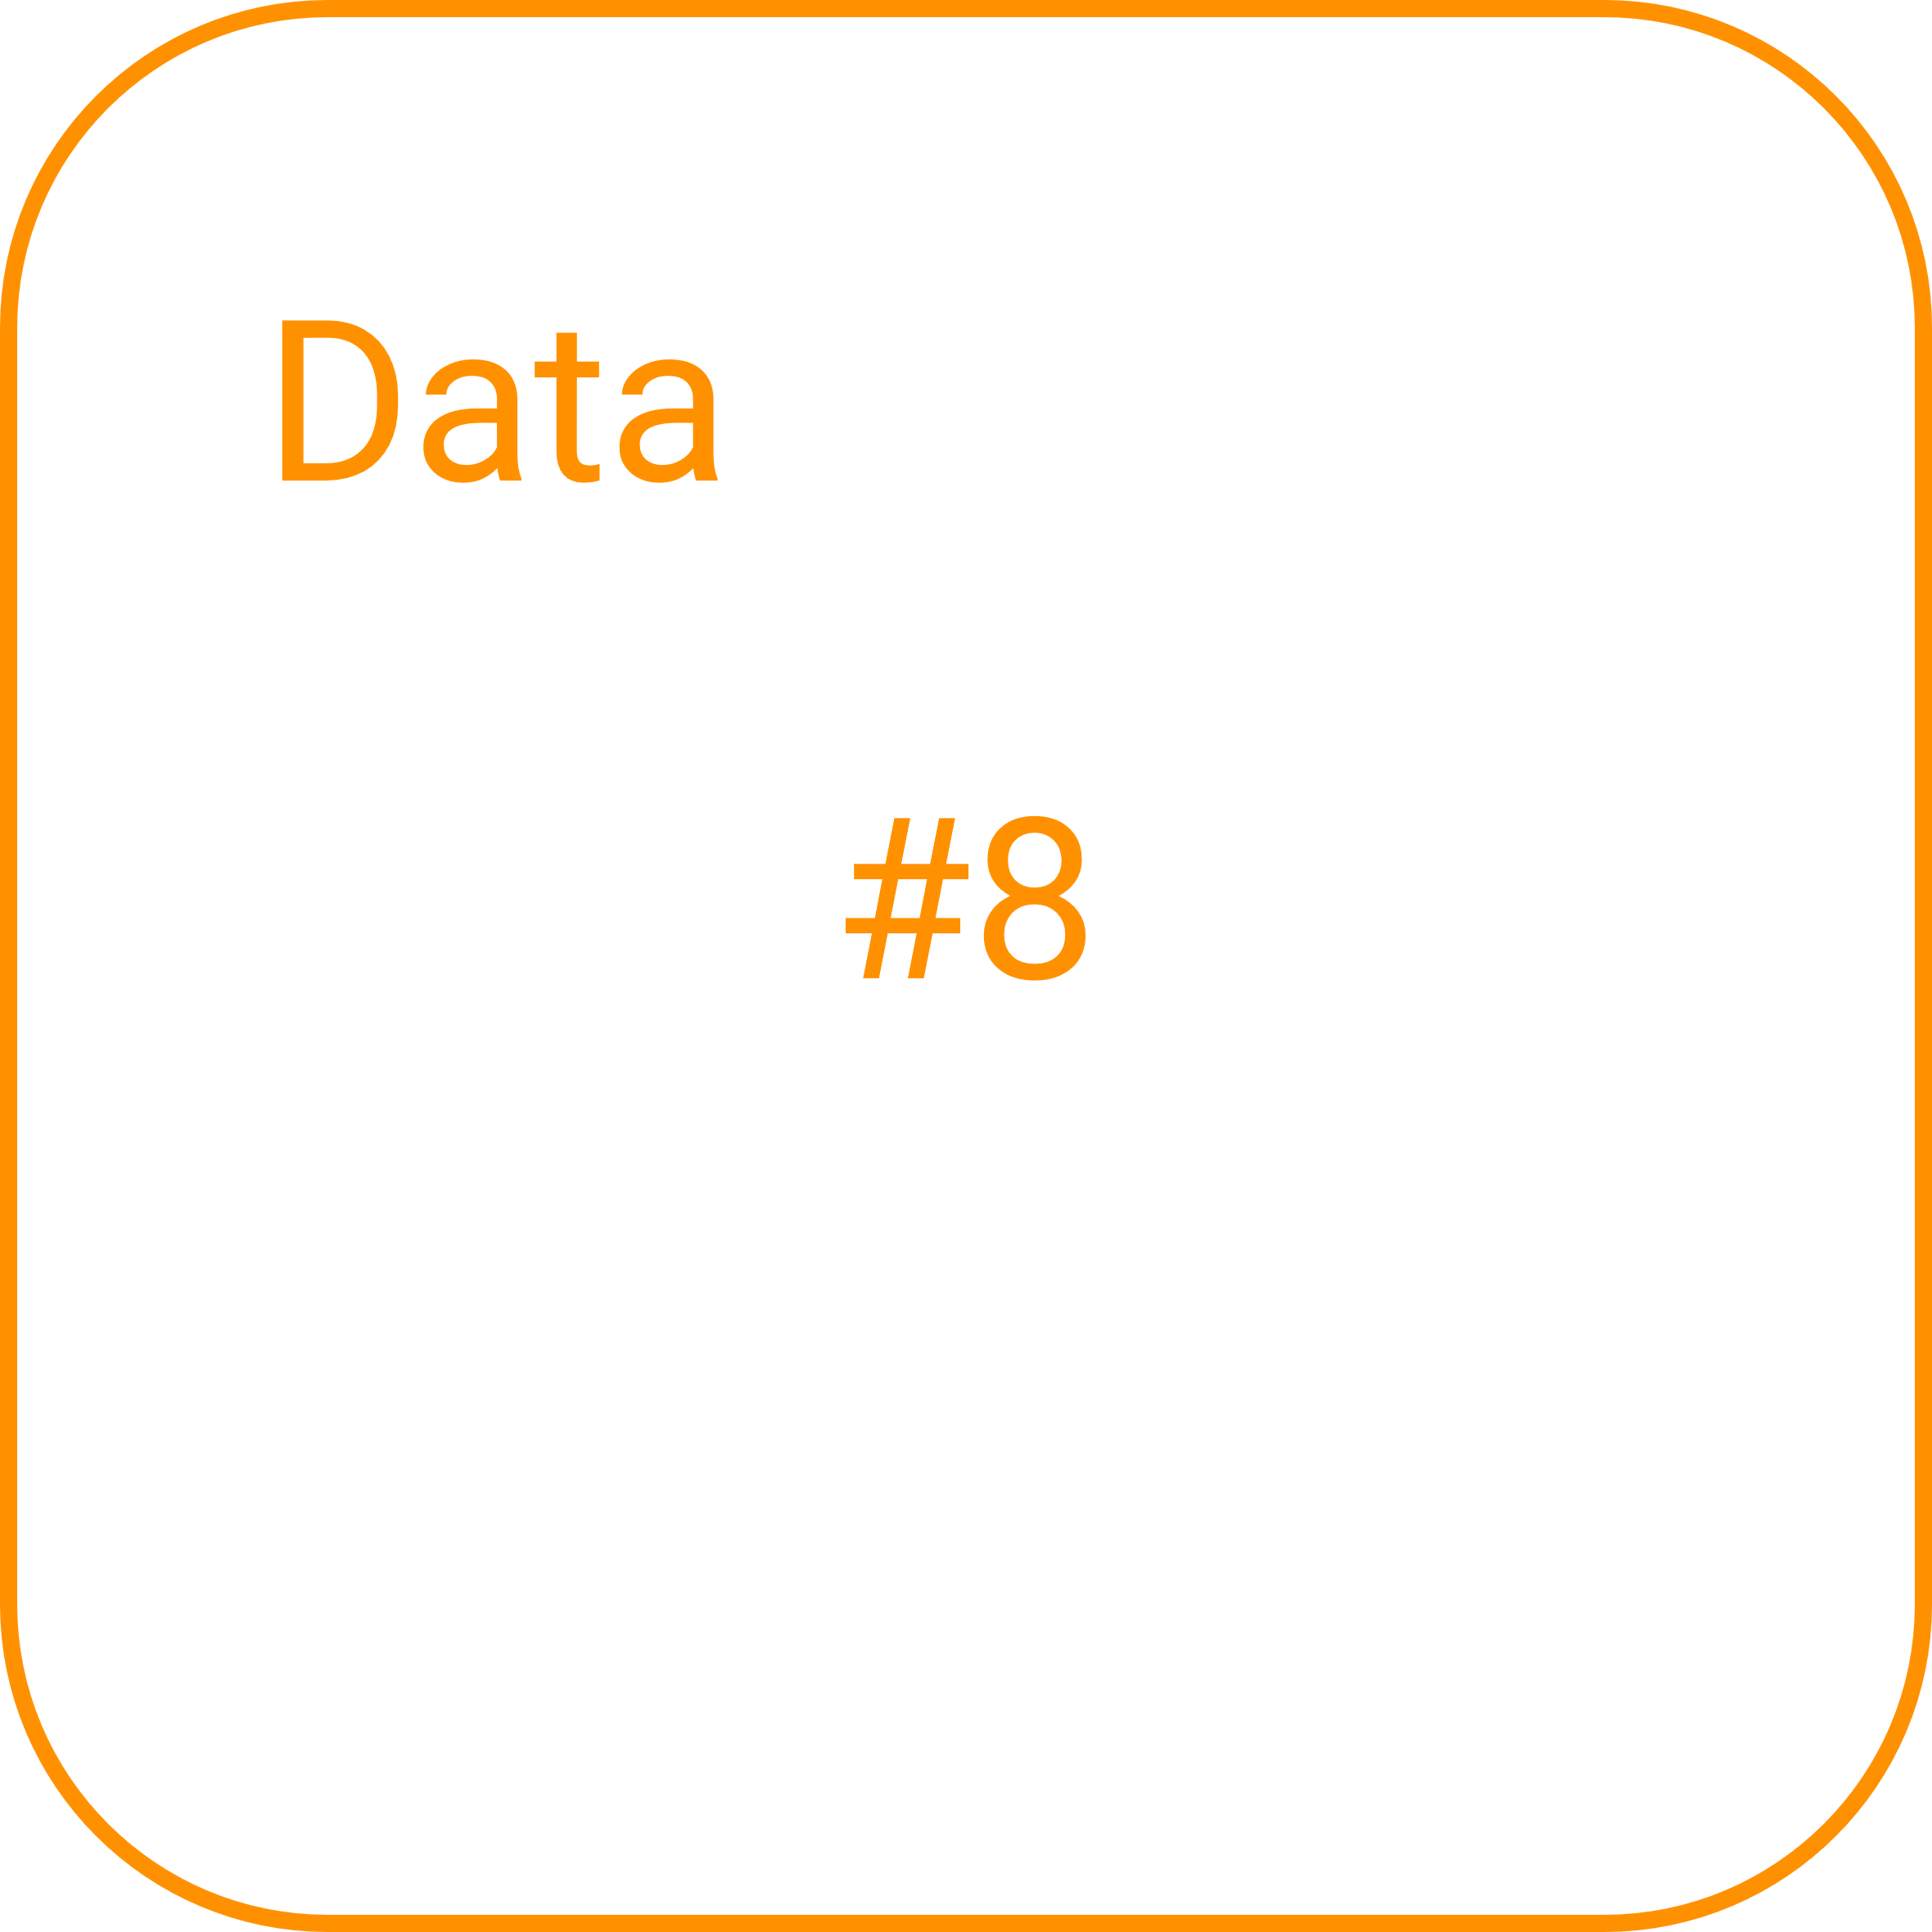 Thumbnail for DataScaleFail #8 - MongoDB DBaaS Alternatives Benchmarks, NoSQL Benchmarking Suites, YCSB Customizing